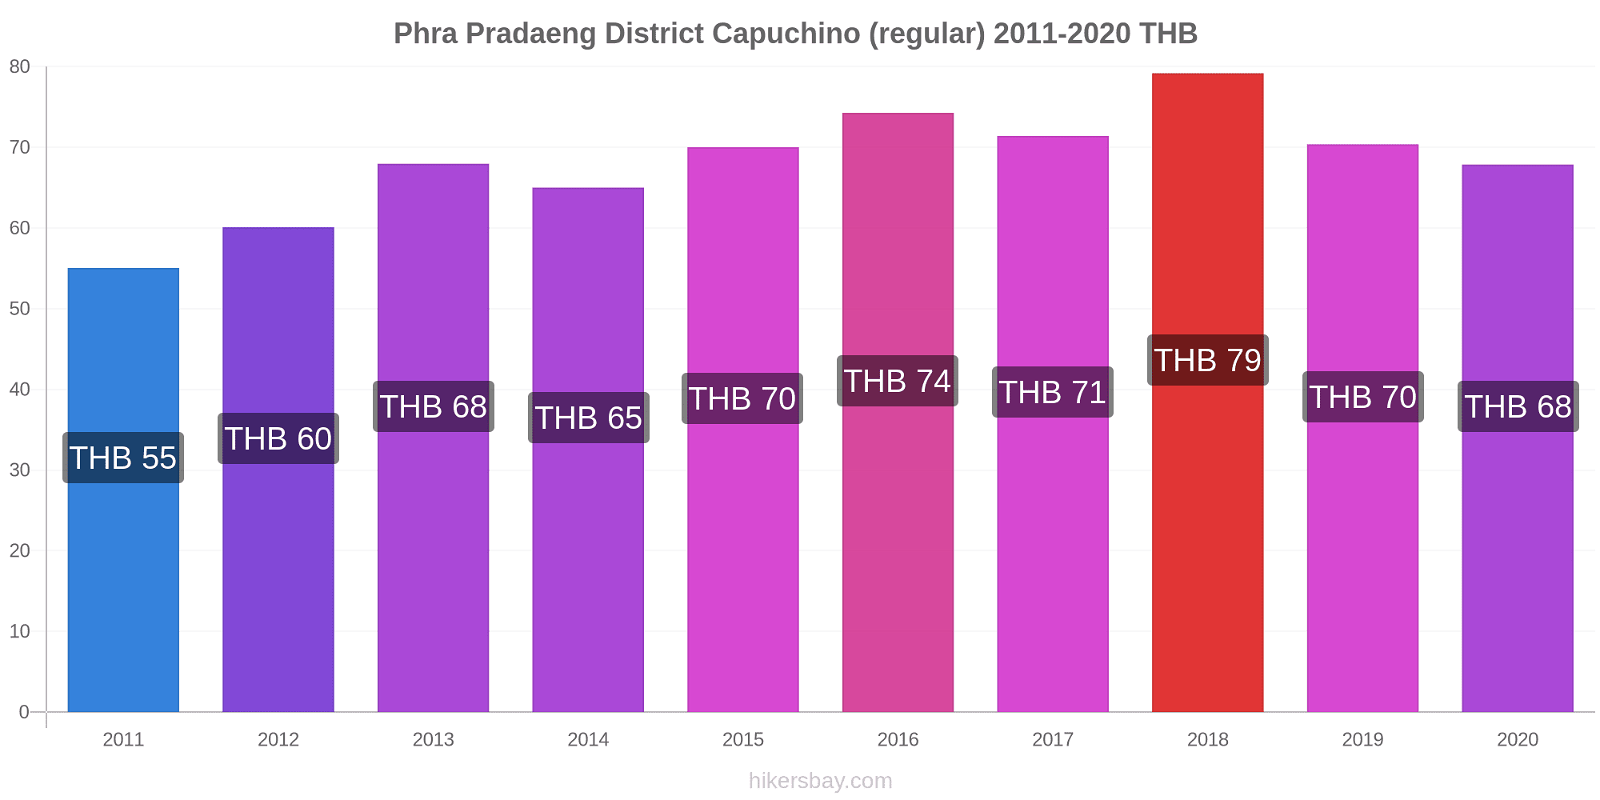 Phra Pradaeng District cambios de precios Capuchino (regular) hikersbay.com